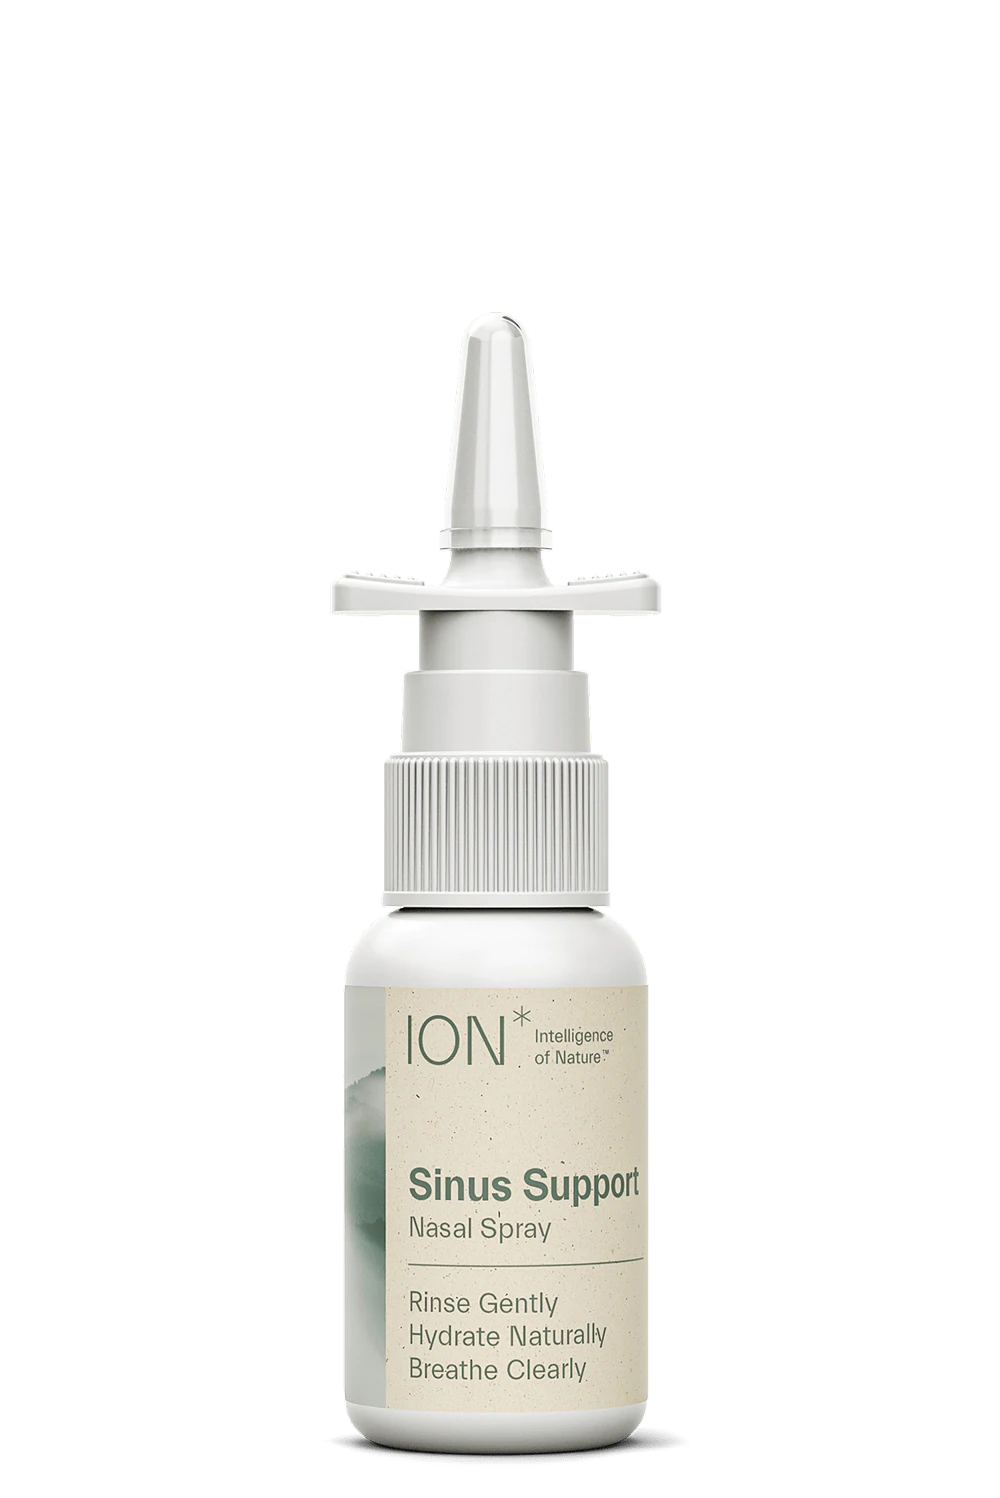 ION* Sinus Support